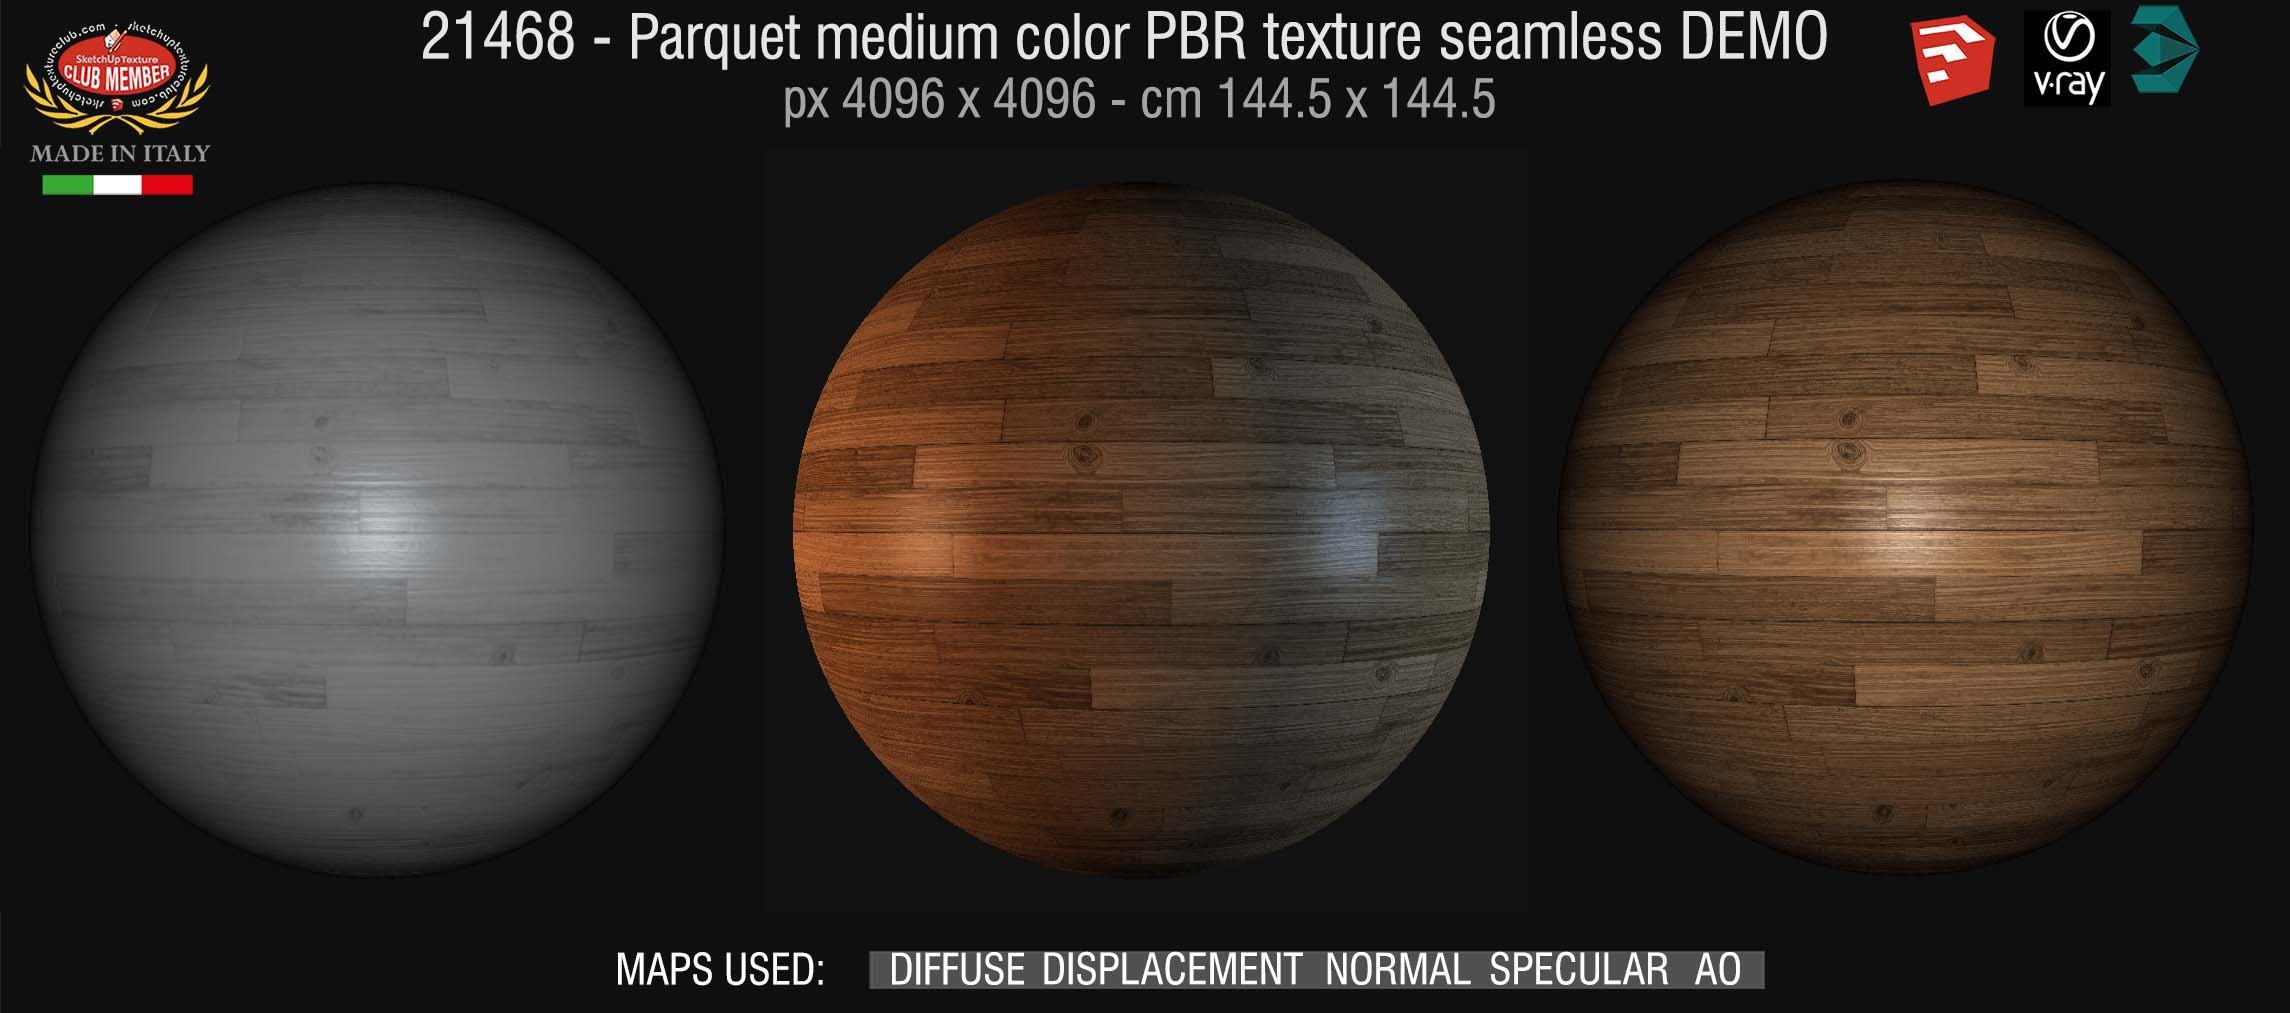 21468 parquet medium color PBR texture seamless DEMO